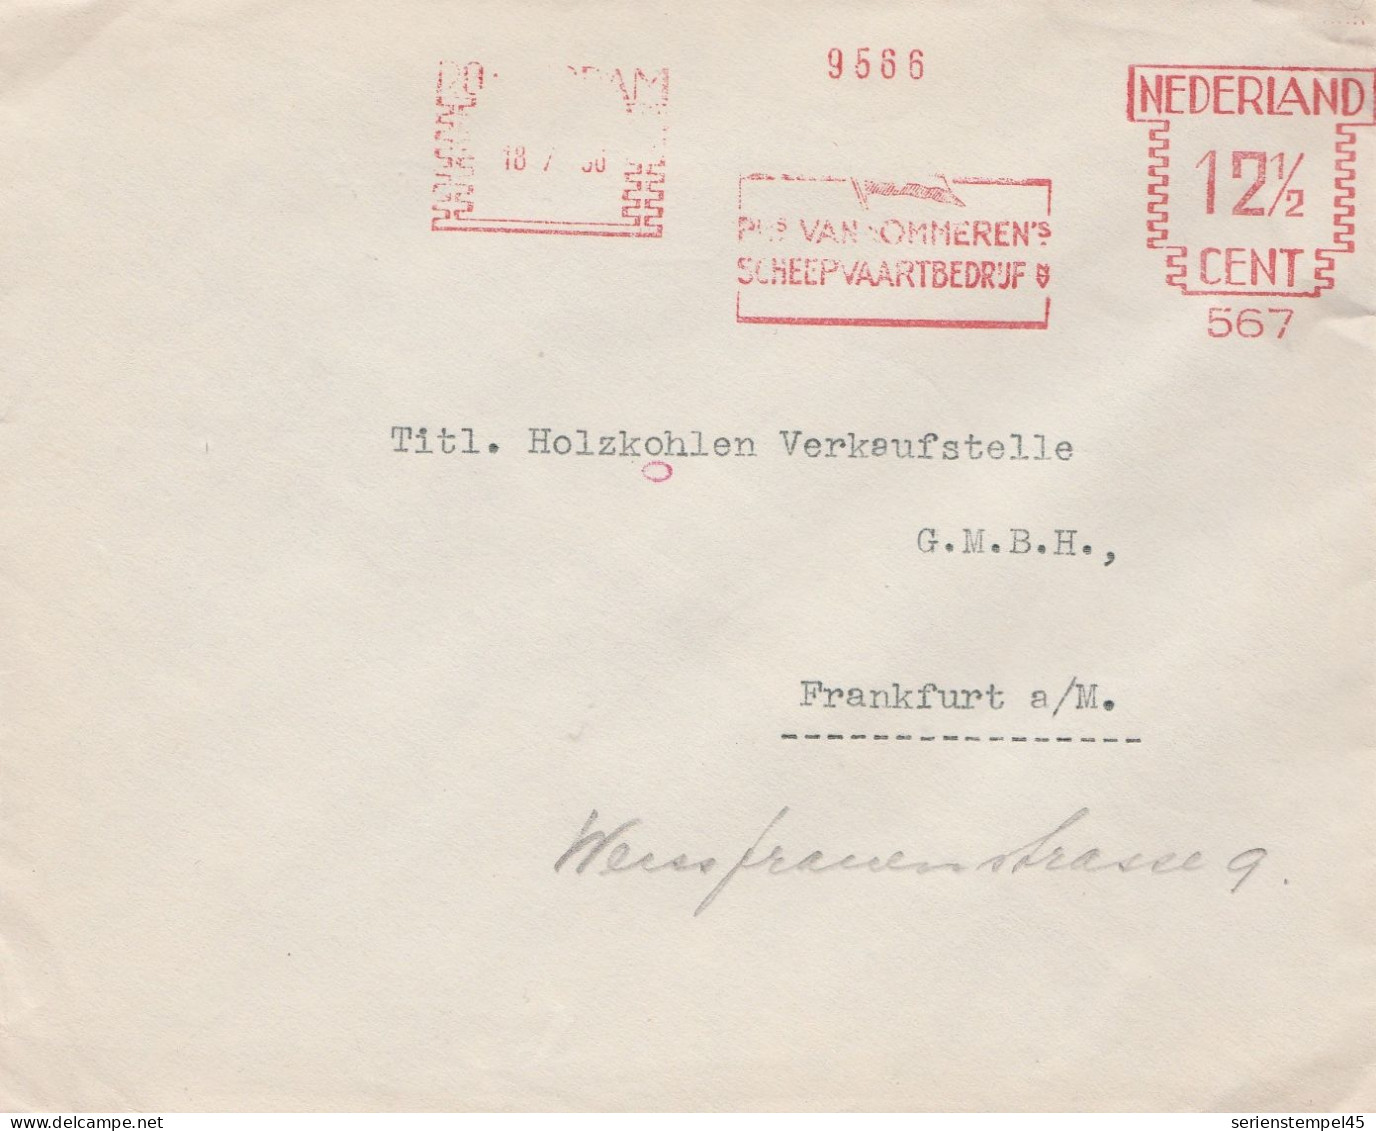 Niederlande Brief Mit Freistempel Phs Van Ommeren's Scheepvaartbedrijf NV Rotterdam 1936 12 1/2 Cent - Frankeermachines (EMA)